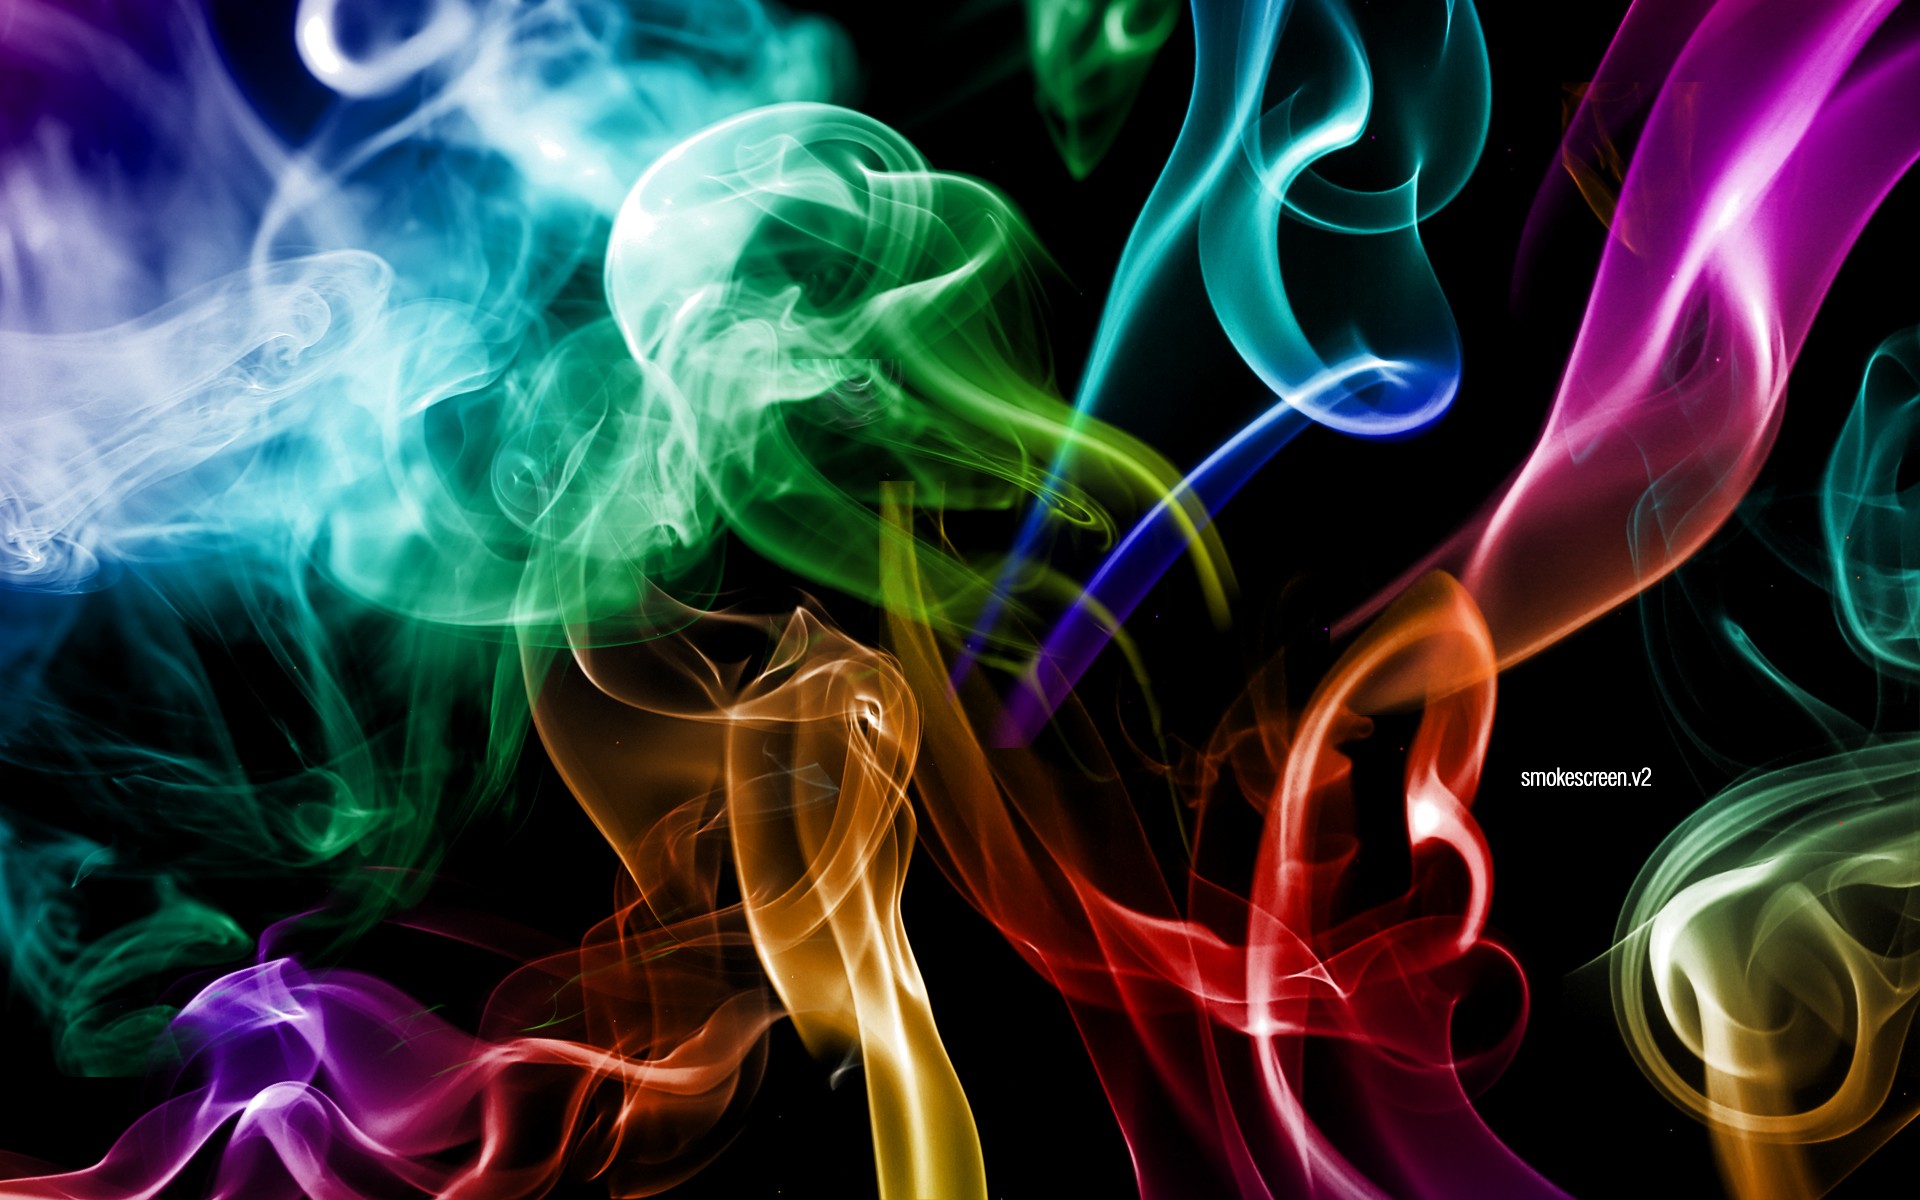 Color Smoke Mobile Wallpaper Images Free Download on Lovepik  400895915